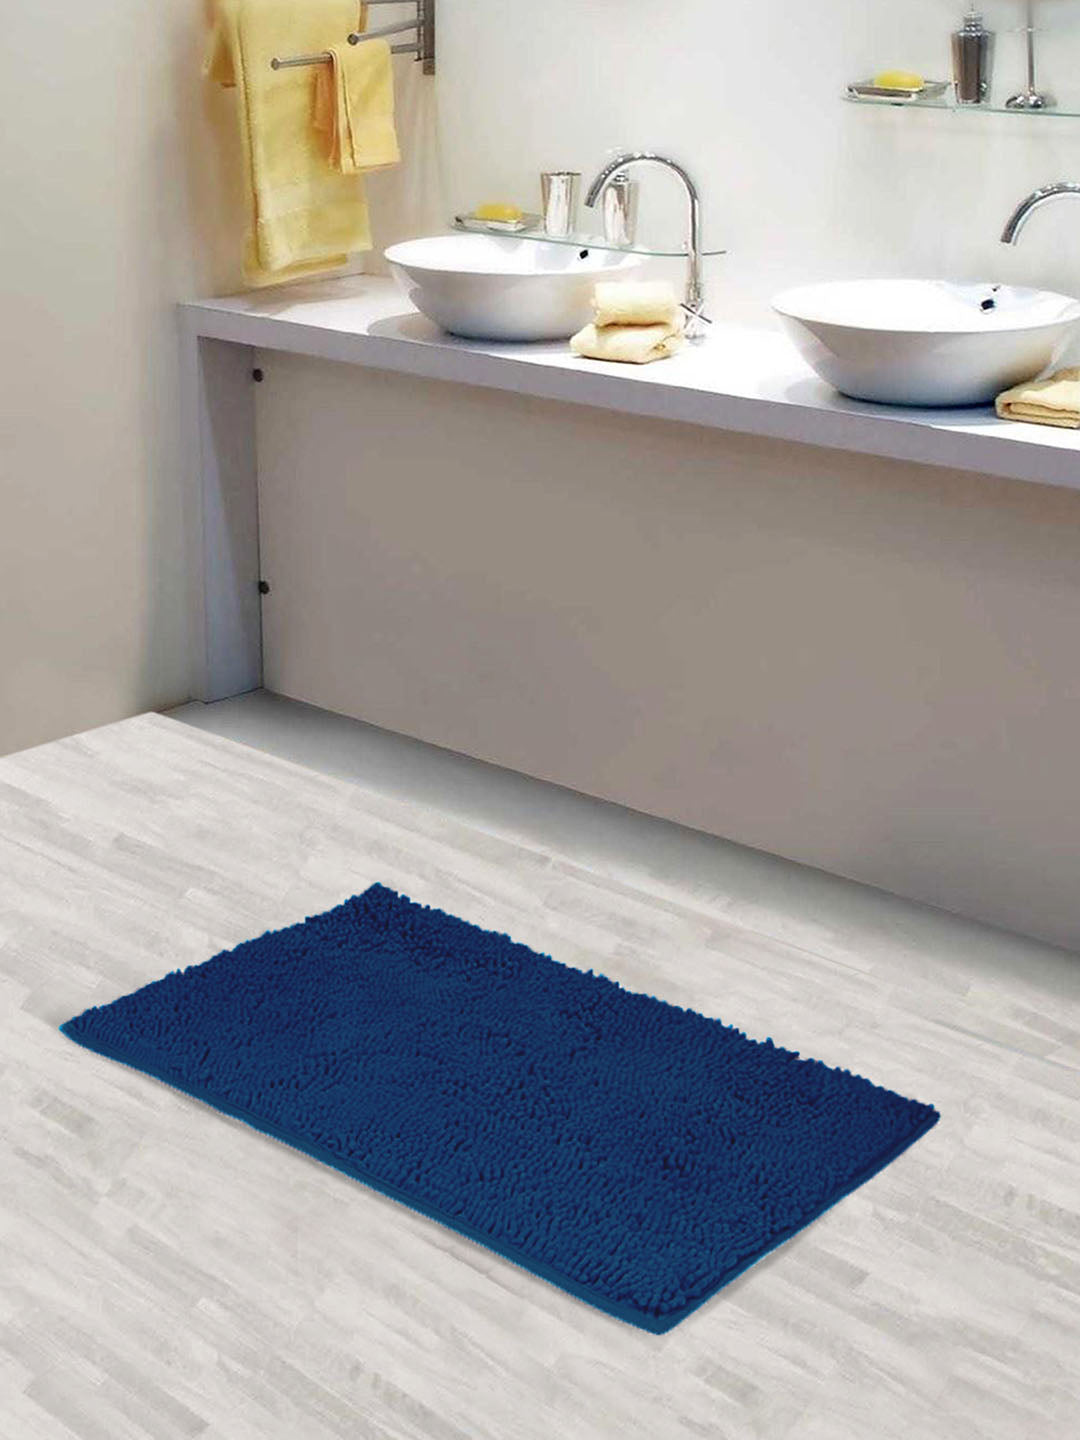 Lushomes bathroom mat, anti slip mat for bathroom floor, 1200 GSM Floor Mat with High Pile Microfiber, door mats for bathroom(16 x 24 Inch, Single Pc, Navy Blue)